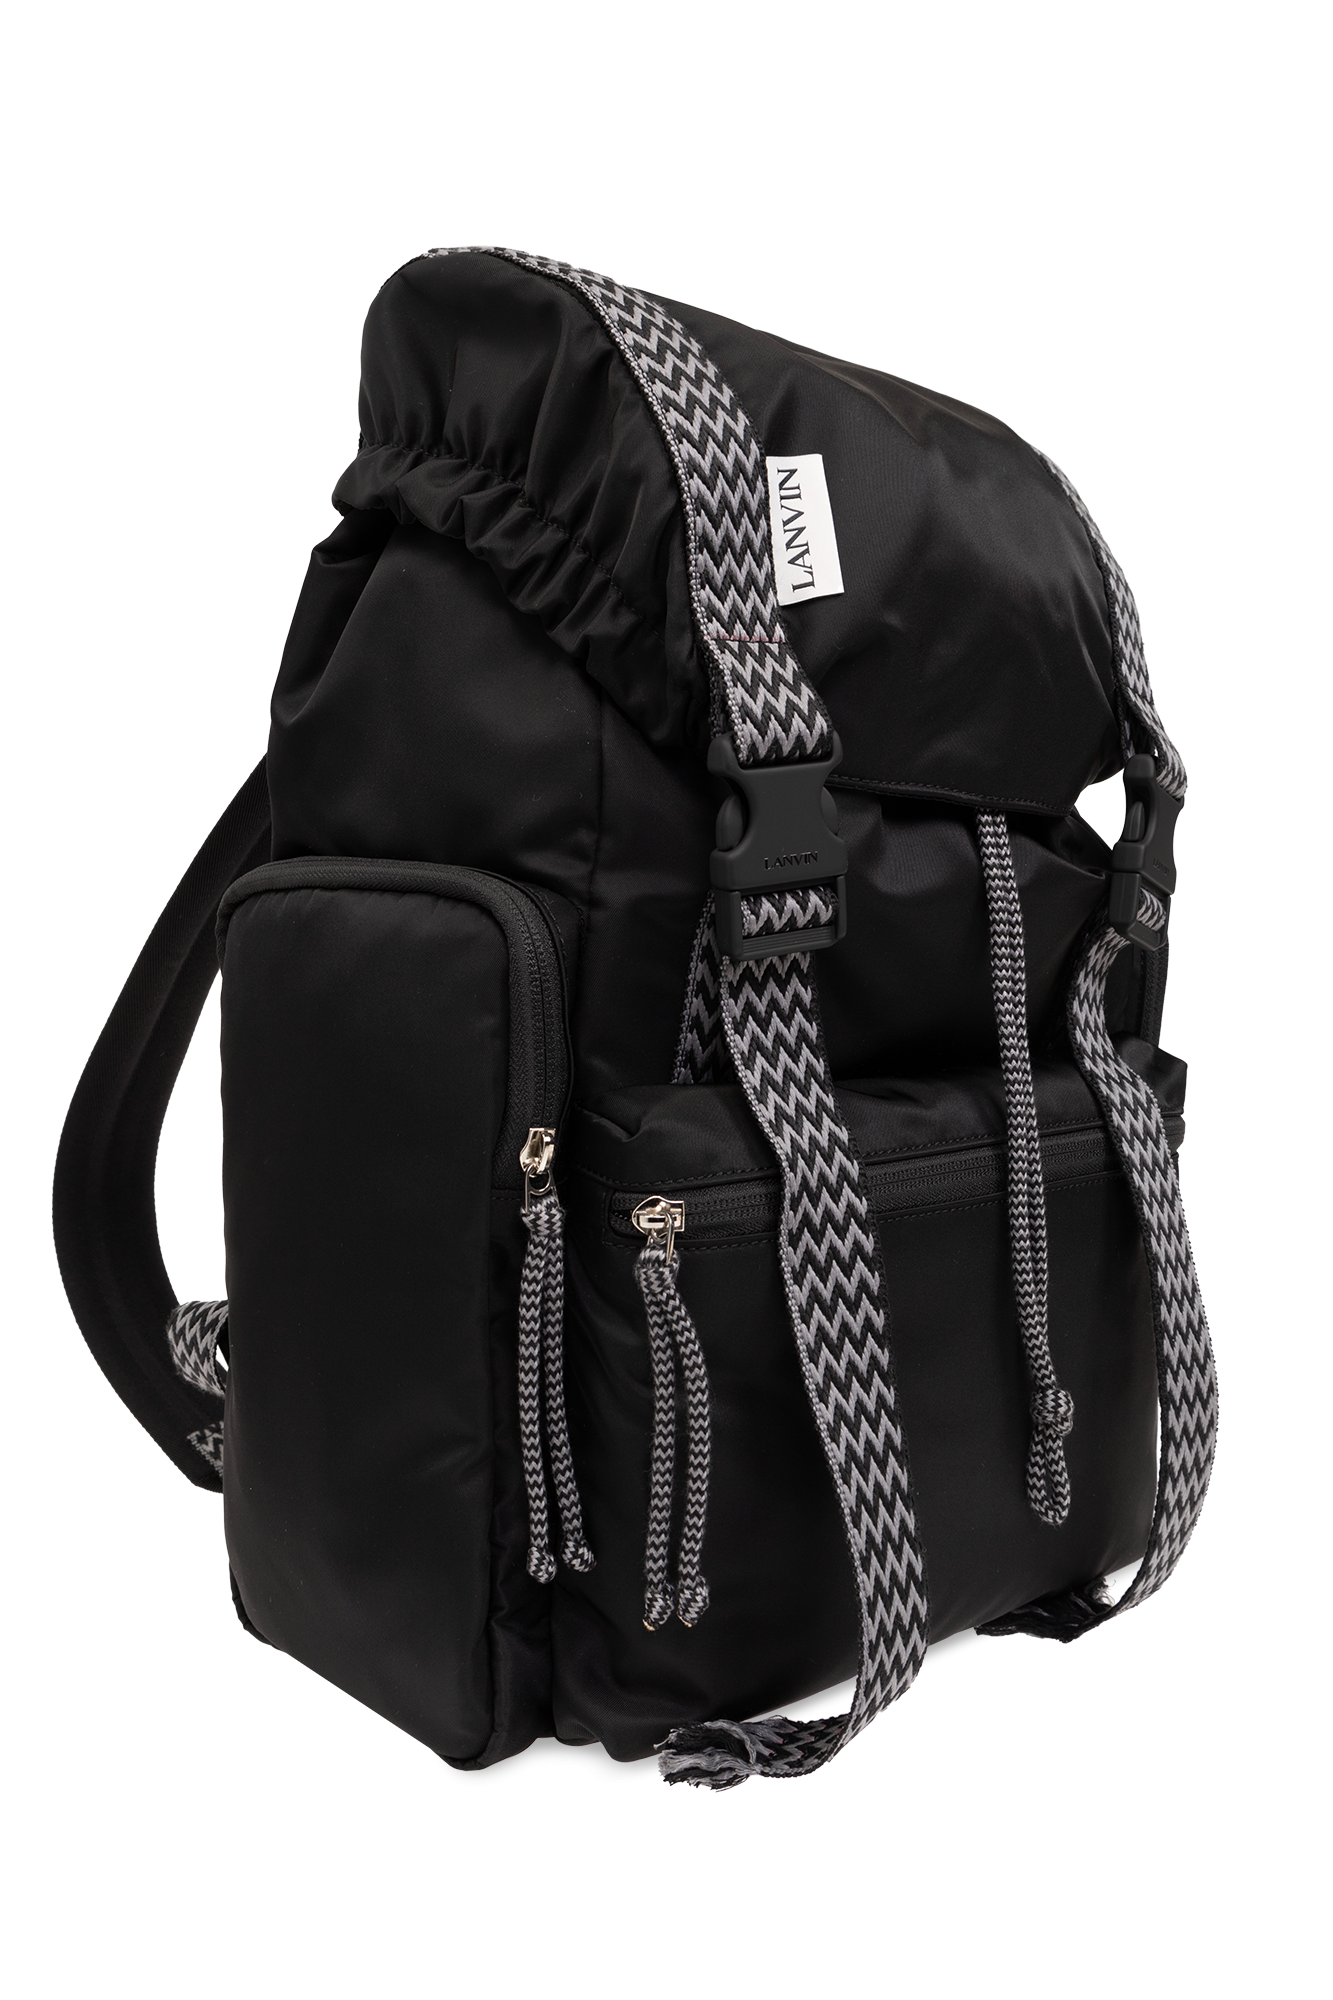 Lanvin backpack tretorn wings mini pack 474101 heather navy